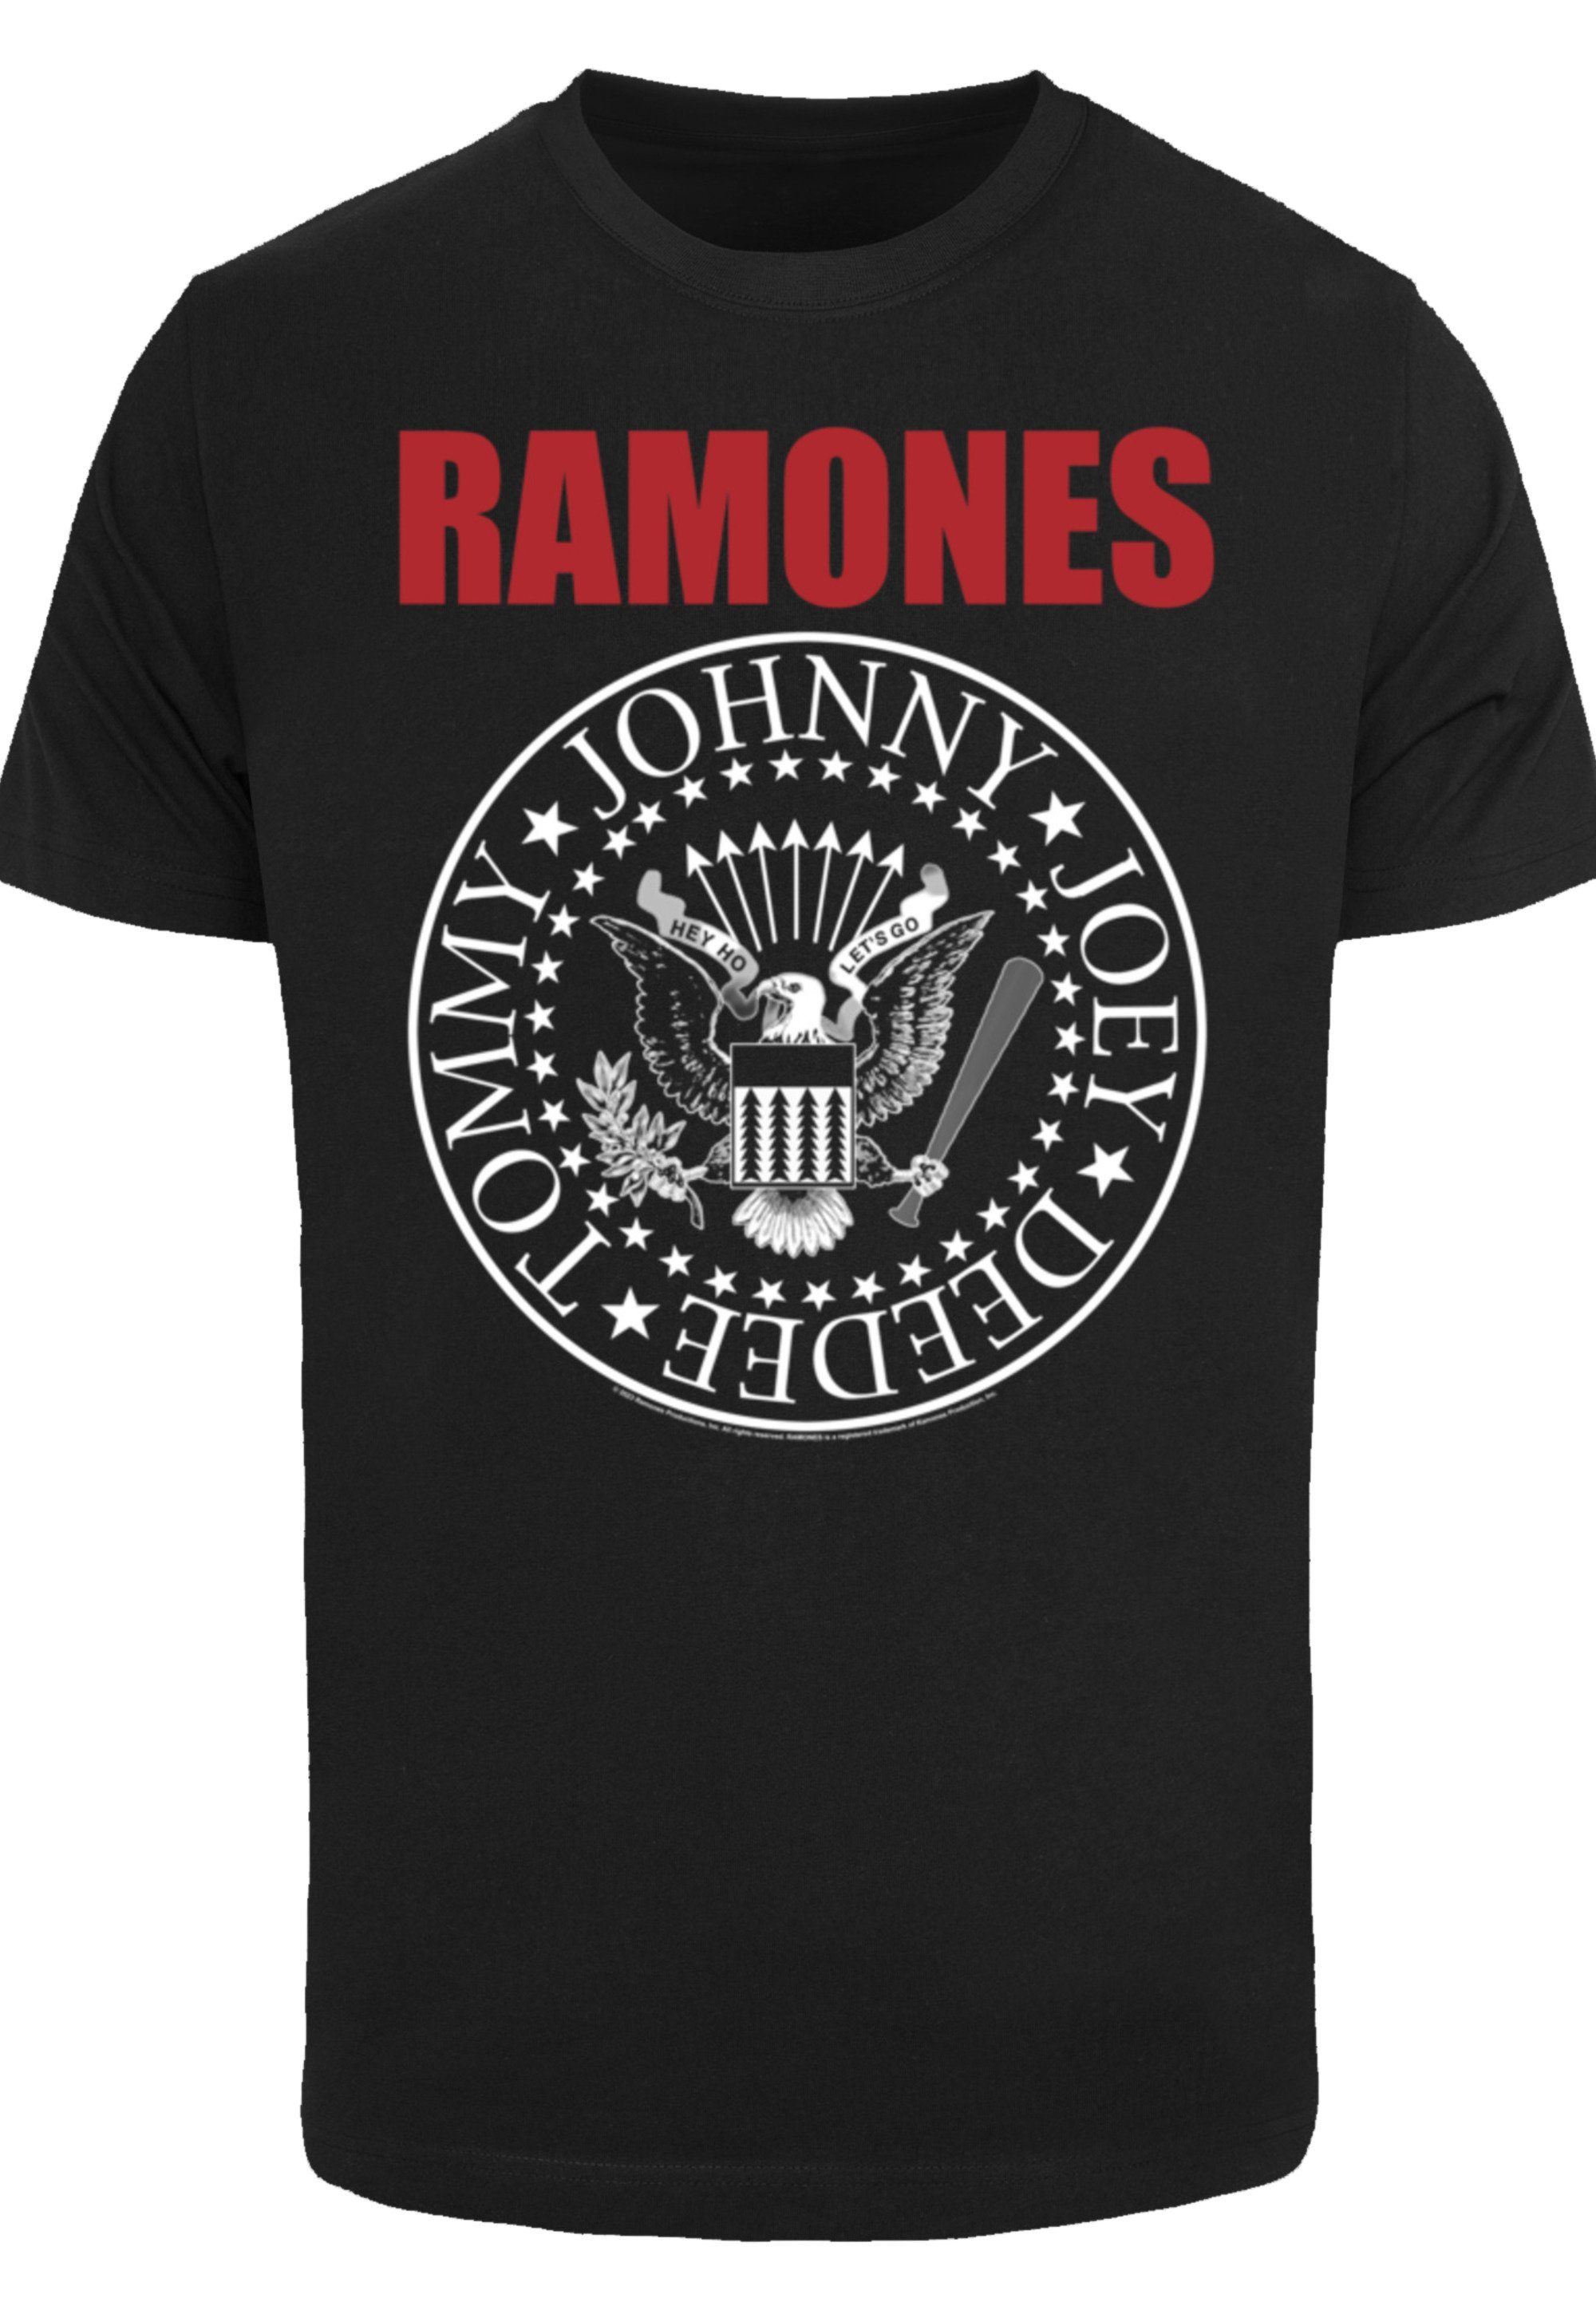 Band, Qualität, Doppelnähte und Saum Rippbündchen Band Musik T-Shirt F4NT4STIC Red Rock-Musik, Premium am Rock Text Hals am Seal Ramones